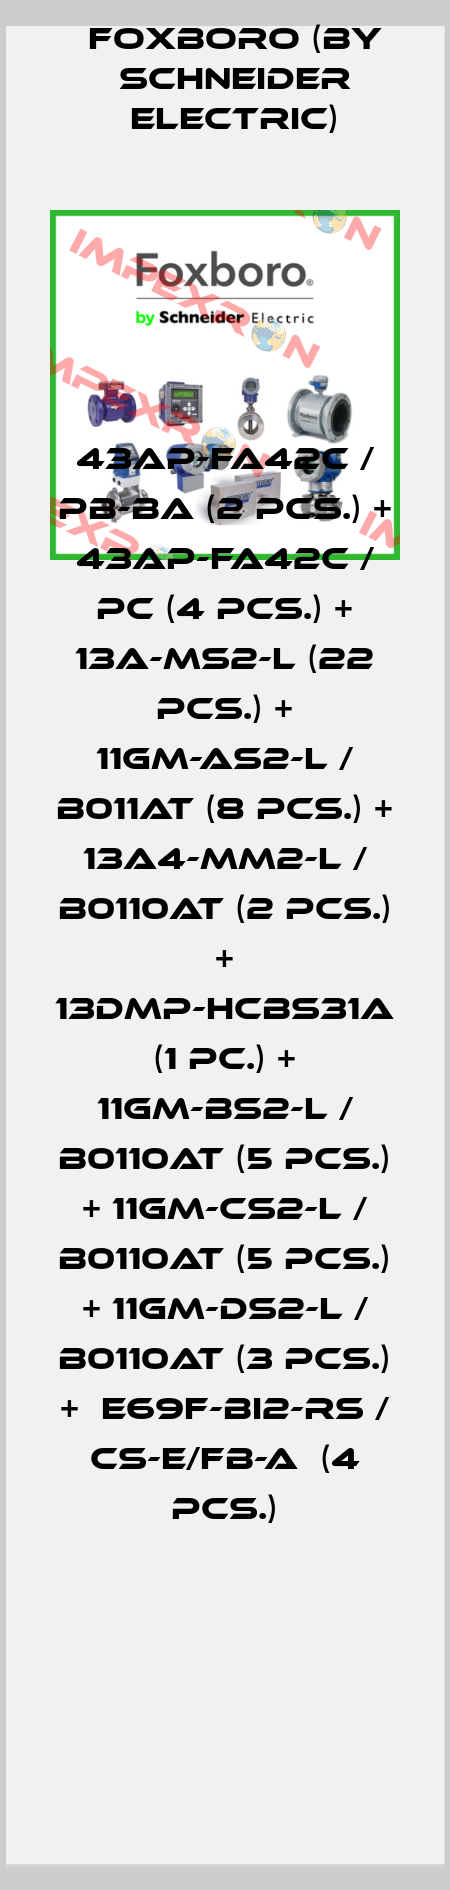 43AP-FA42C / PB-BA (2 pcs.) + 43AP-FA42C / PC (4 pcs.) + 13A-MS2-L (22 pcs.) + 11GM-AS2-L / B011AT (8 pcs.) + 13A4-MM2-L / B0110AT (2 pcs.) + 13DMP-HCBS31A (1 pc.) + 11GM-BS2-L / B0110AT (5 pcs.) + 11GM-CS2-L / B0110AT (5 pcs.) + 11GM-DS2-L / B0110AT (3 pcs.) +  E69F-BI2-RS / CS-E/FB-A  (4 pcs.) Foxboro (by Schneider Electric)